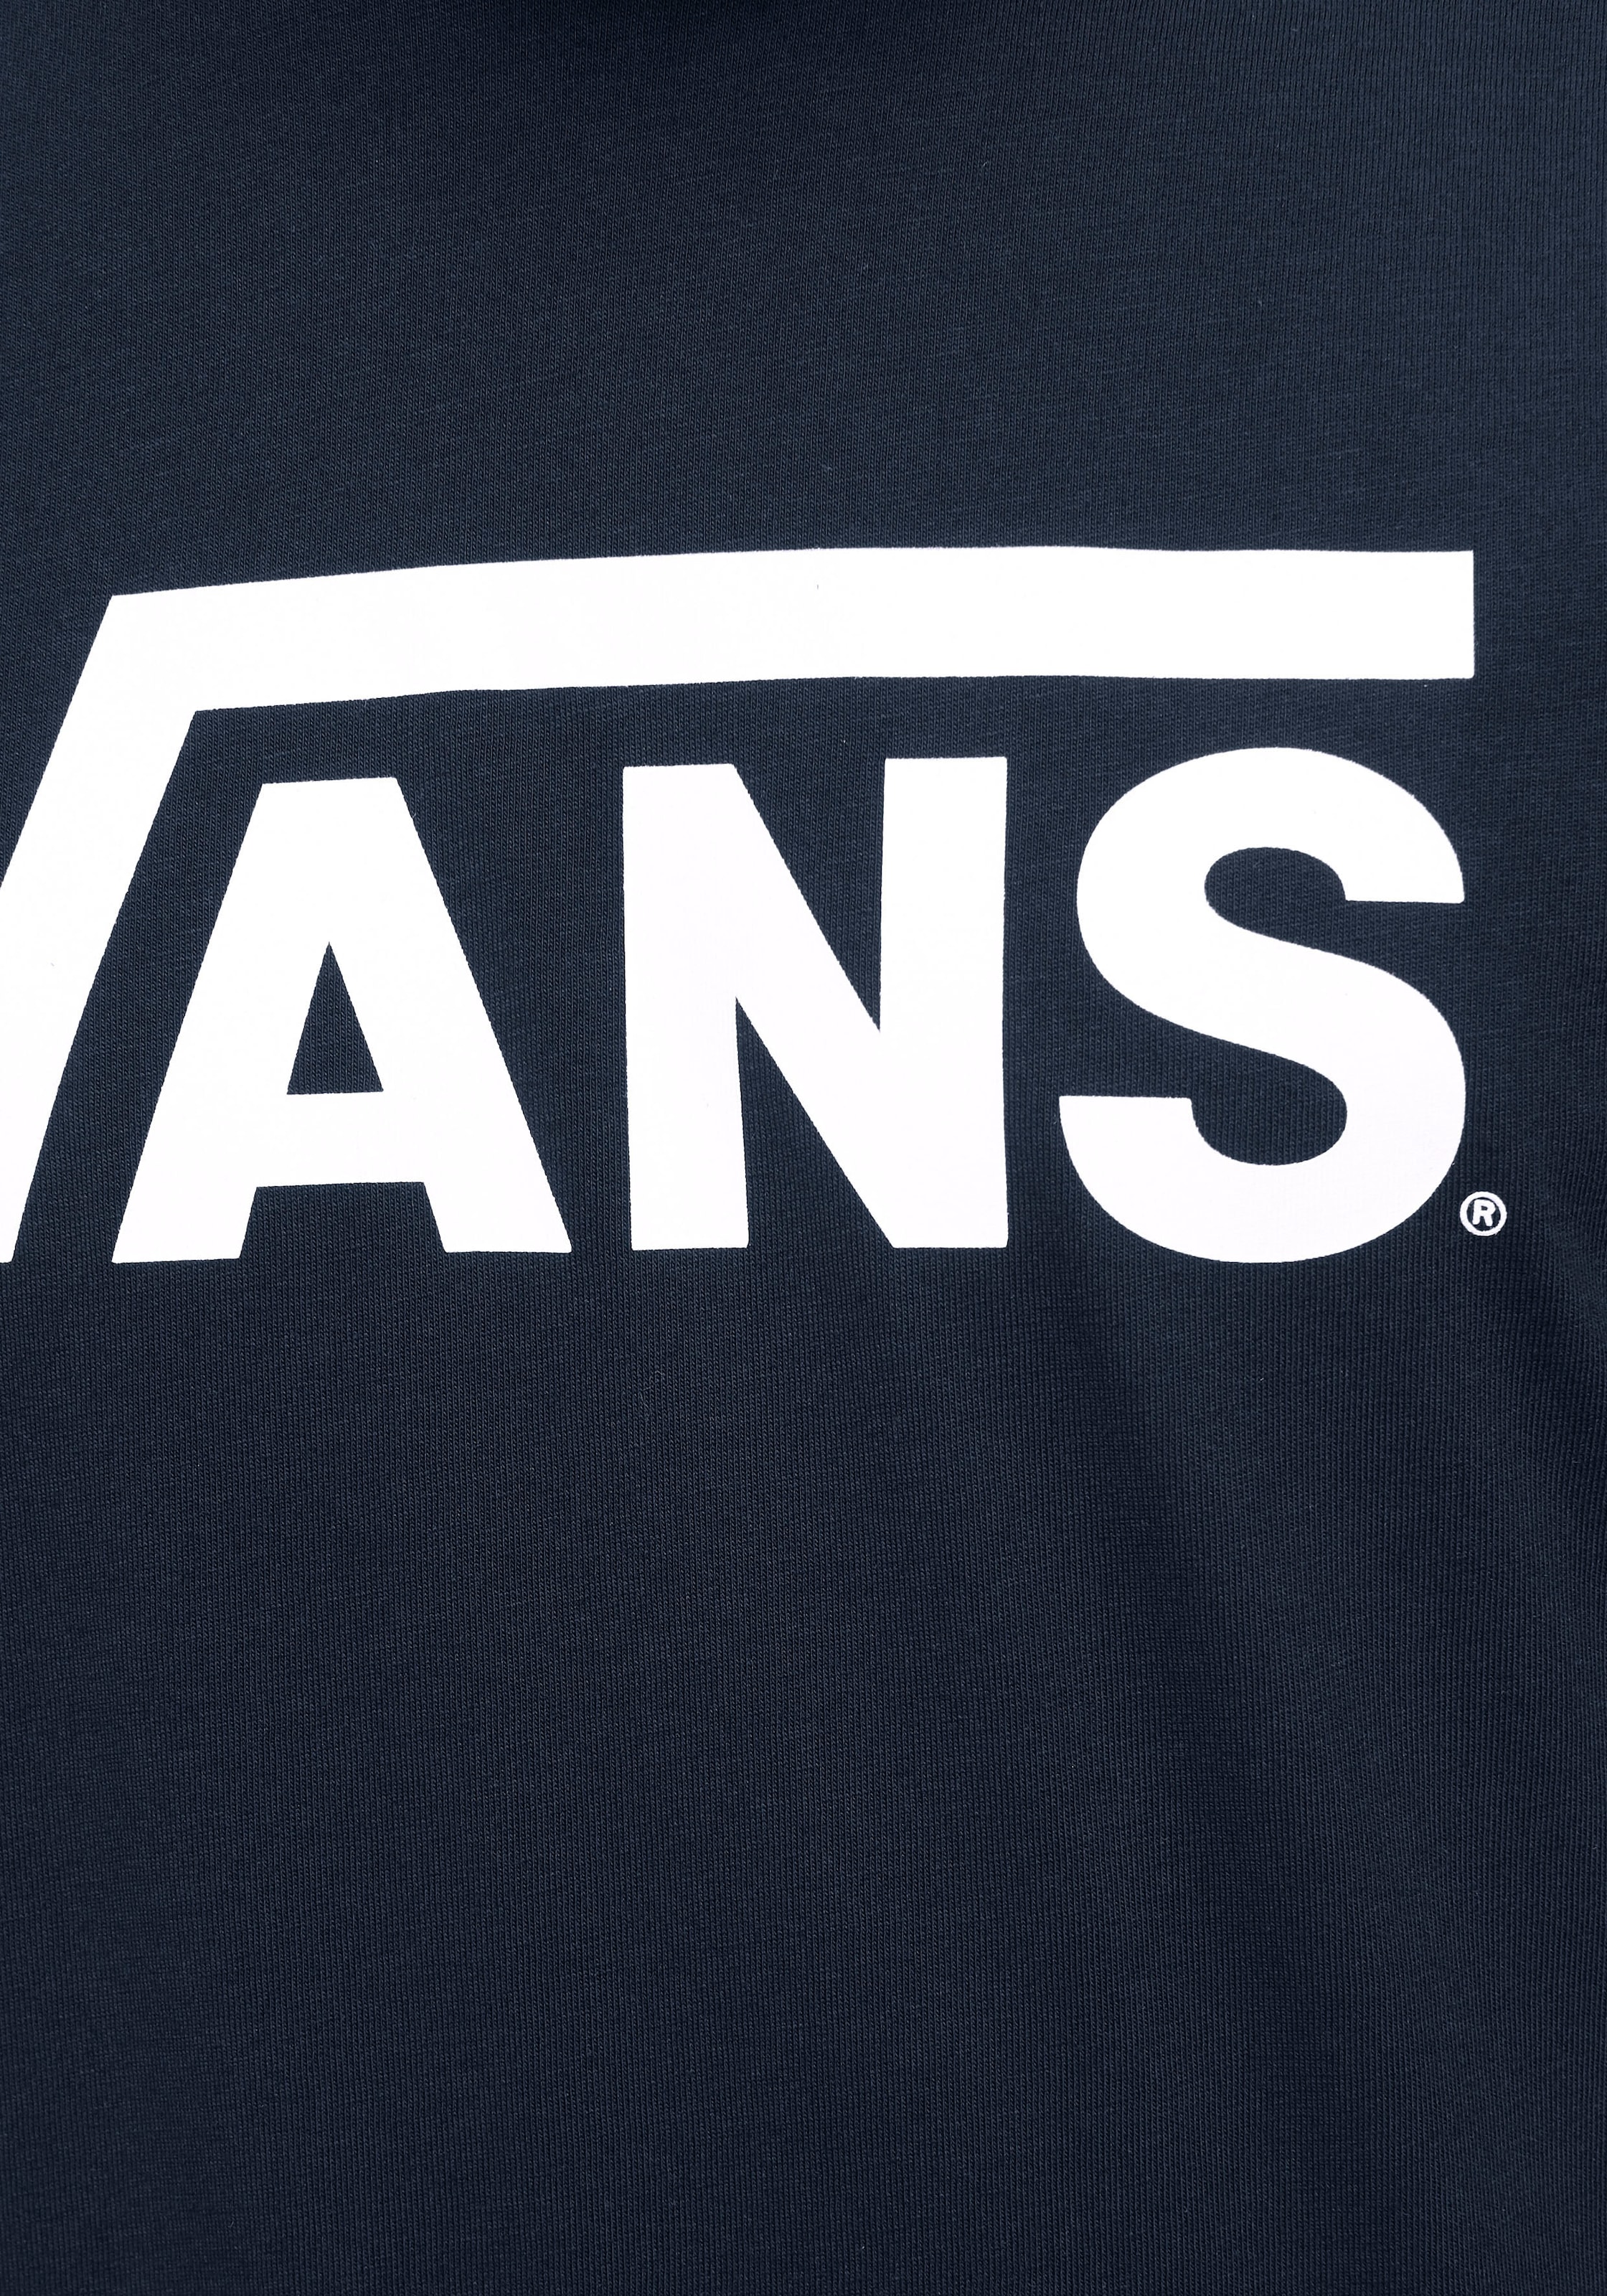 Vans T-Shirt »MN VANS CLASSIC«, mit grossem Logoprint